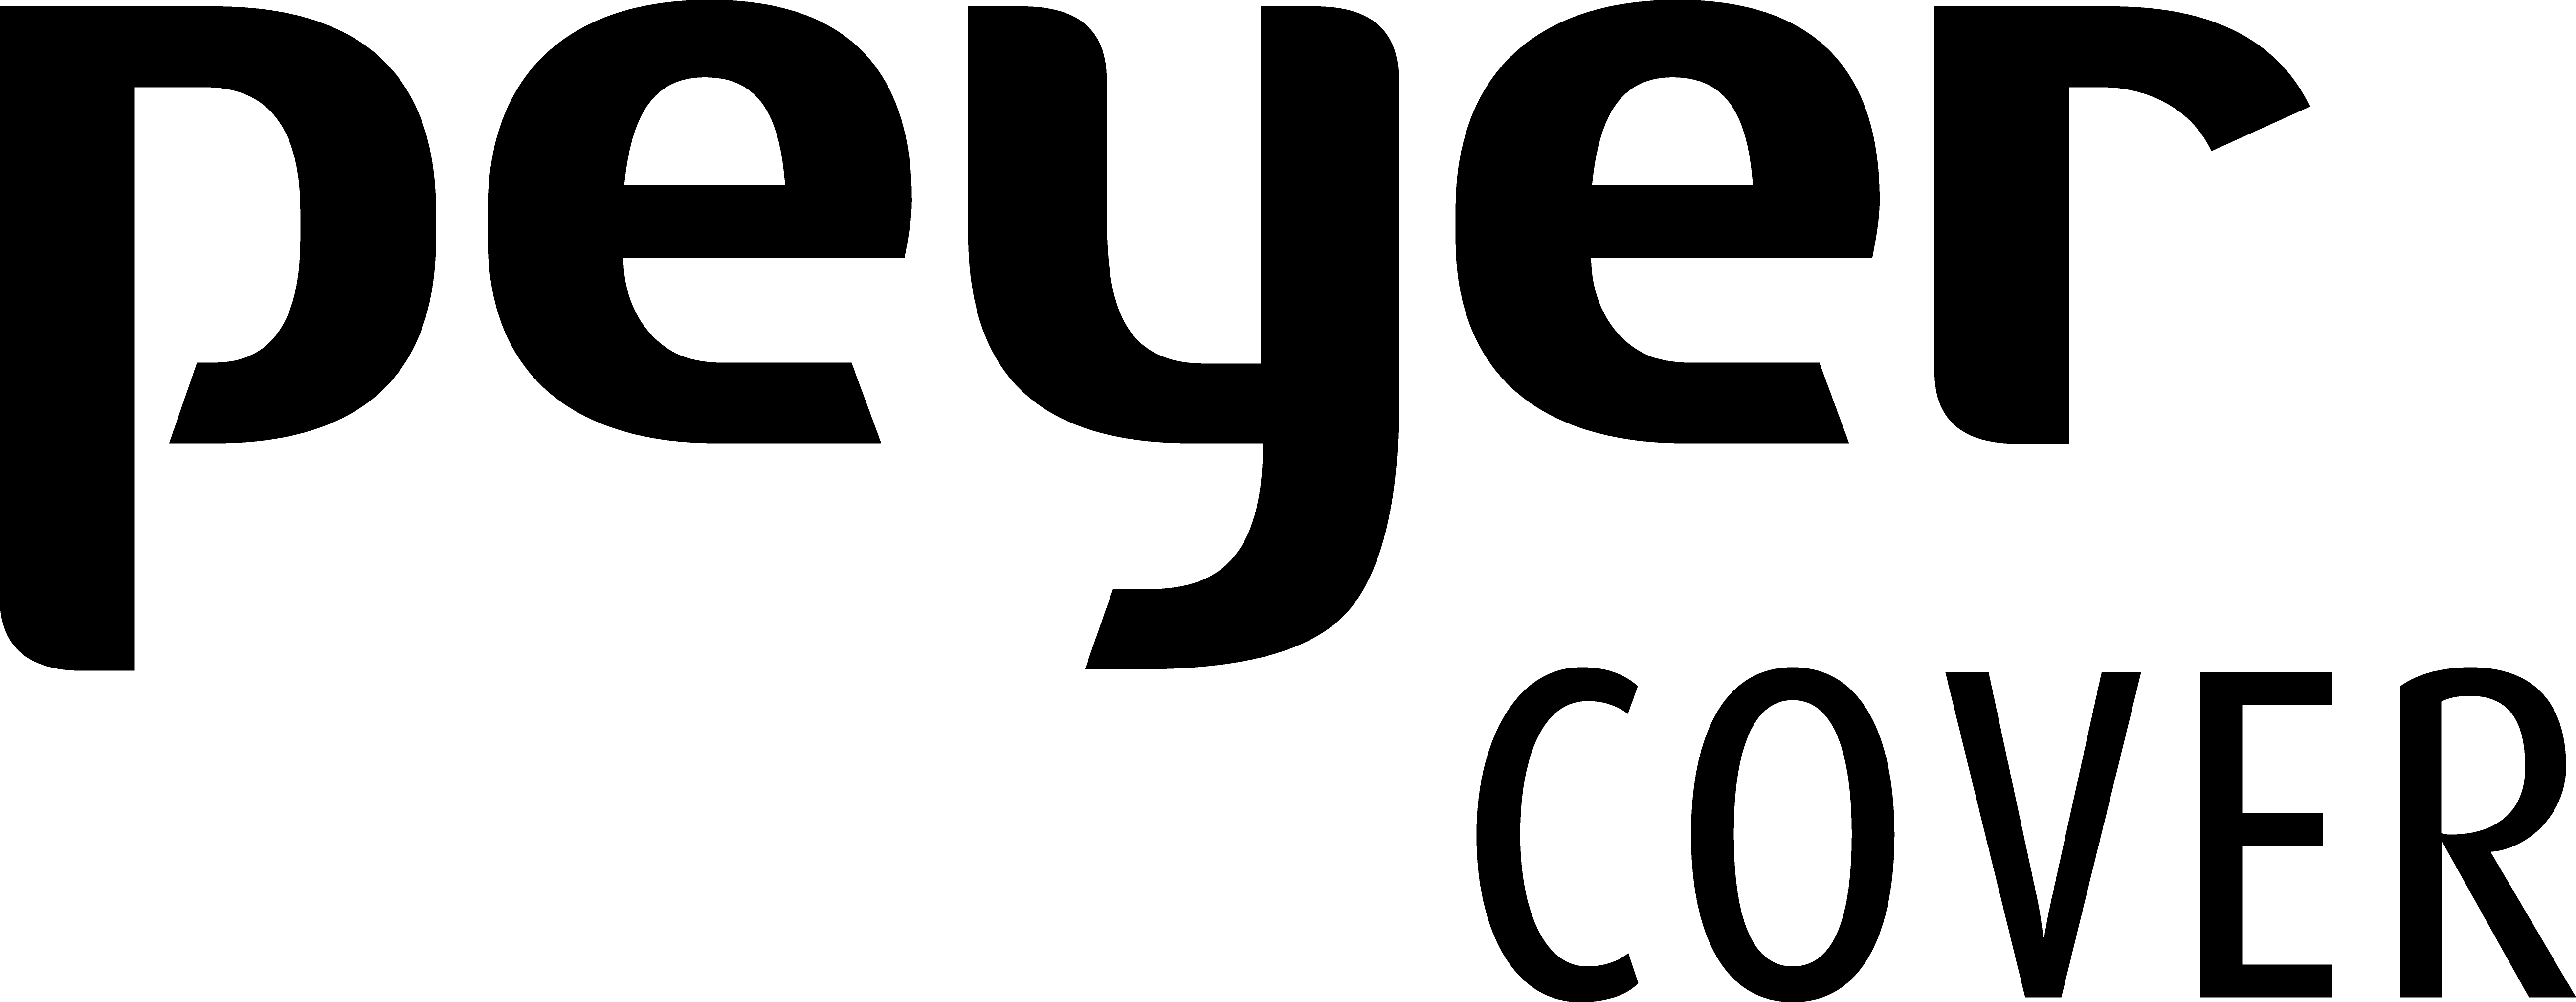 Peyer Cover logo